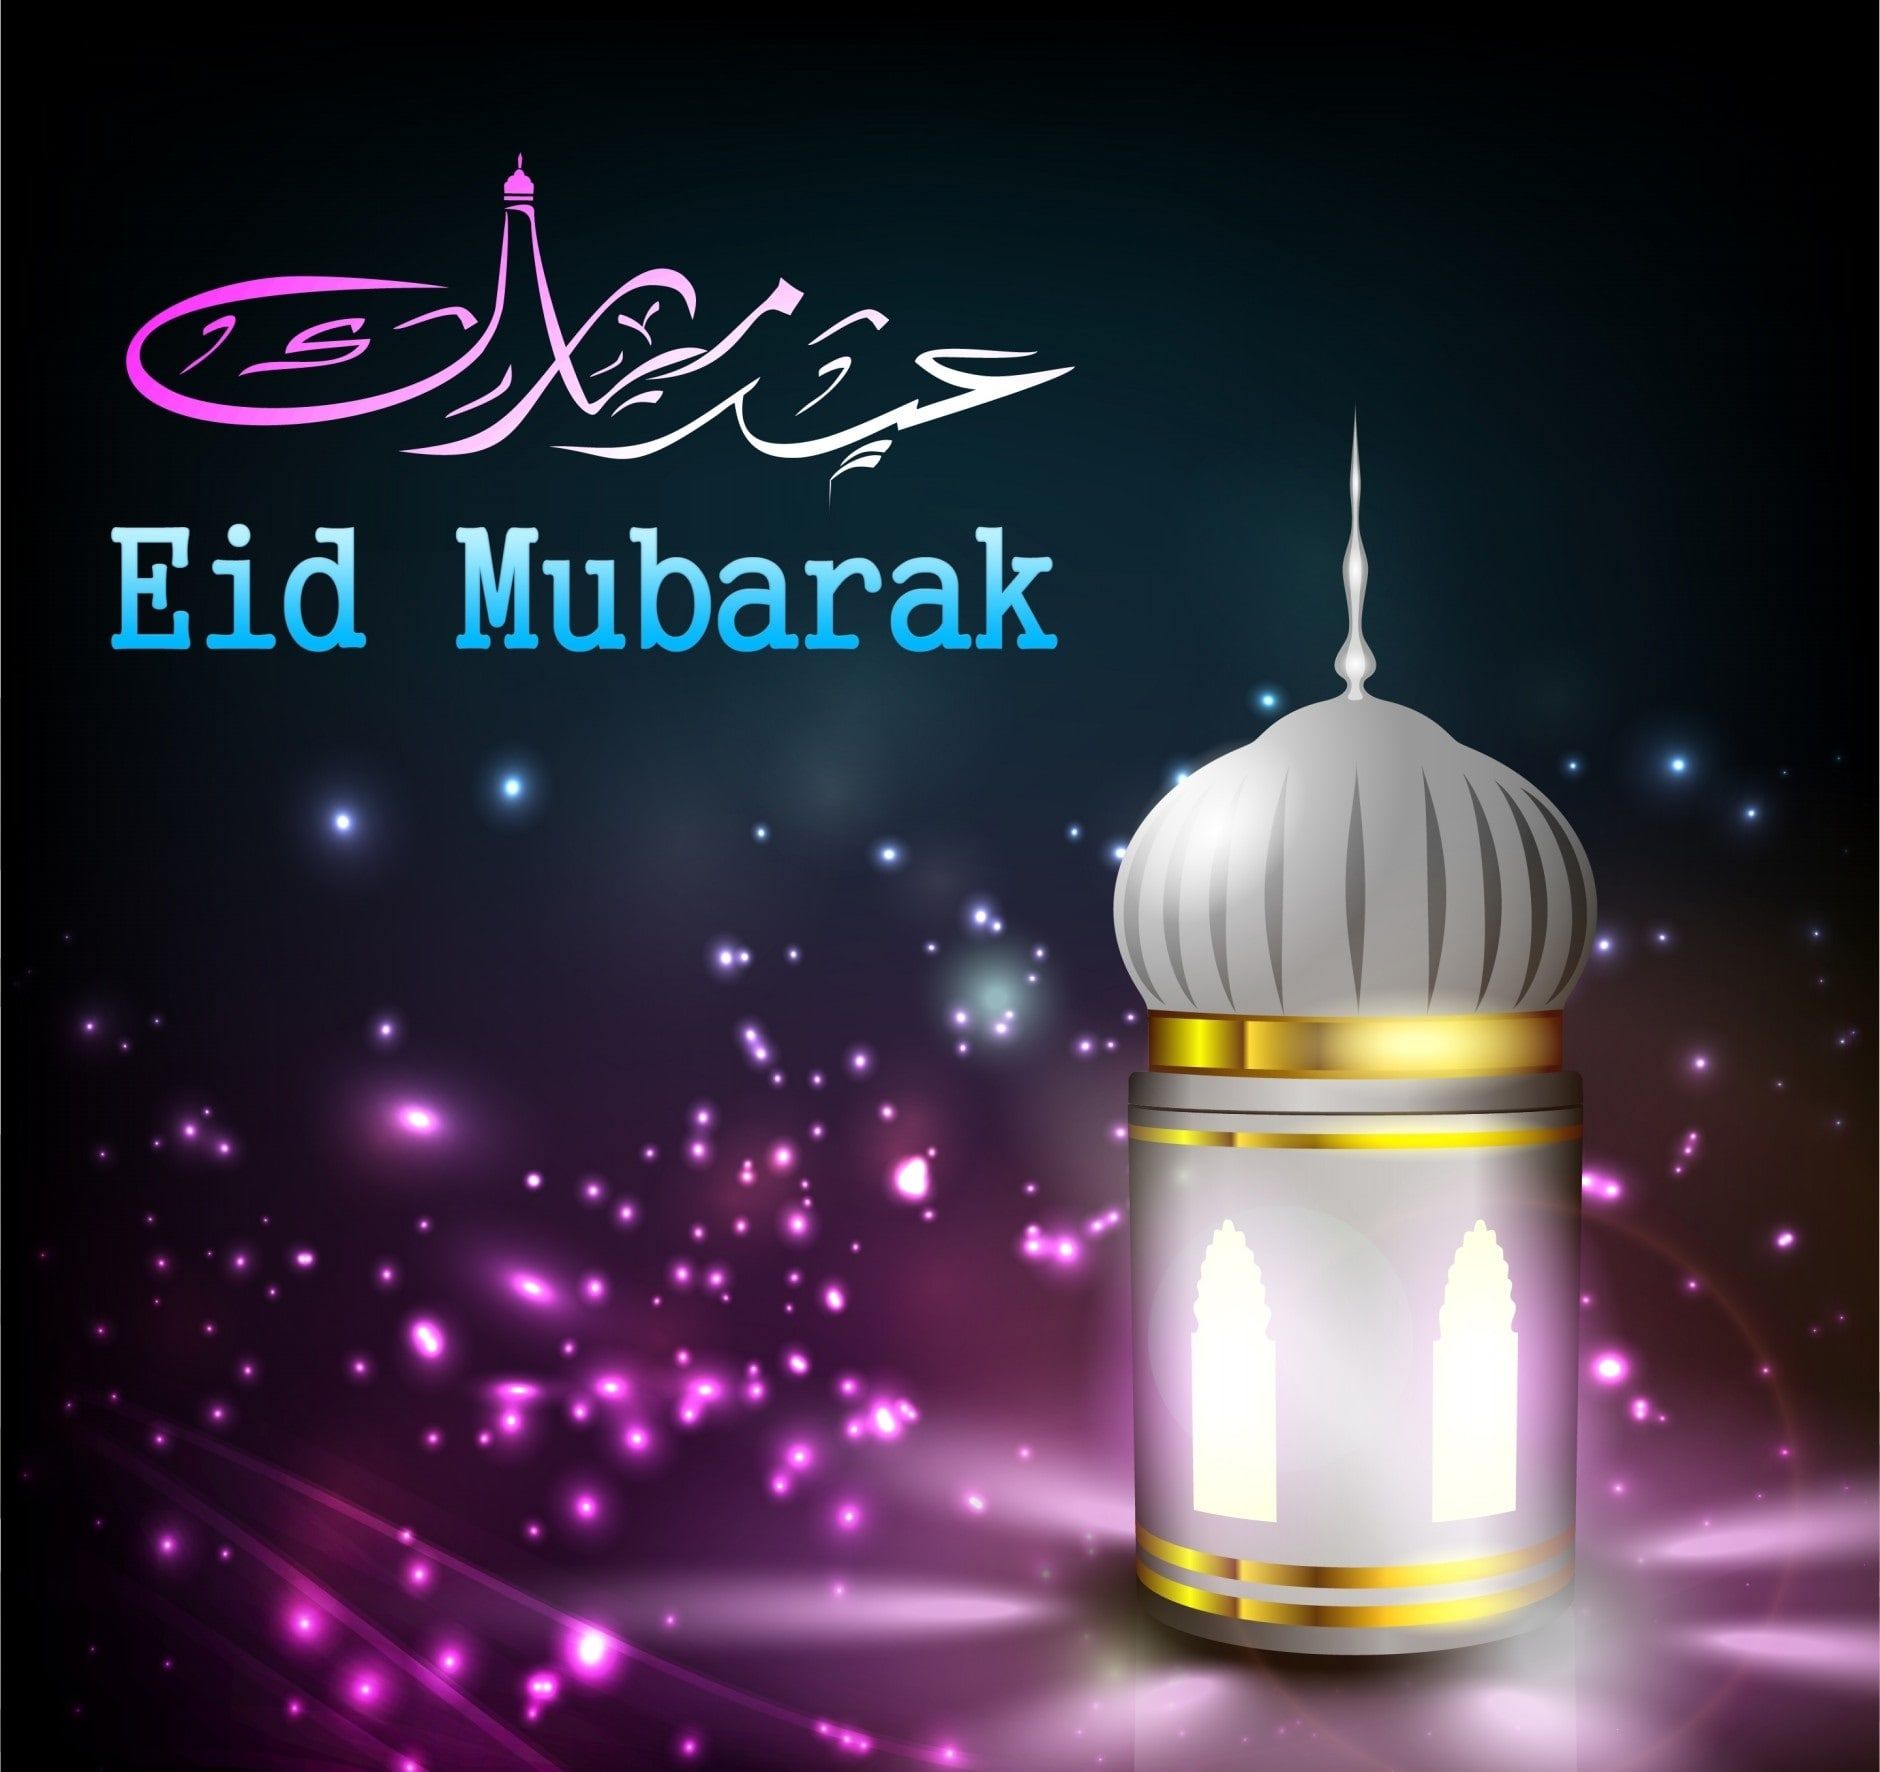 Eid Mubarak Wallpaper 3D Live Wallpaper HD. Eid mubarak wallpaper, Eid wallpaper, Eid mubarak image